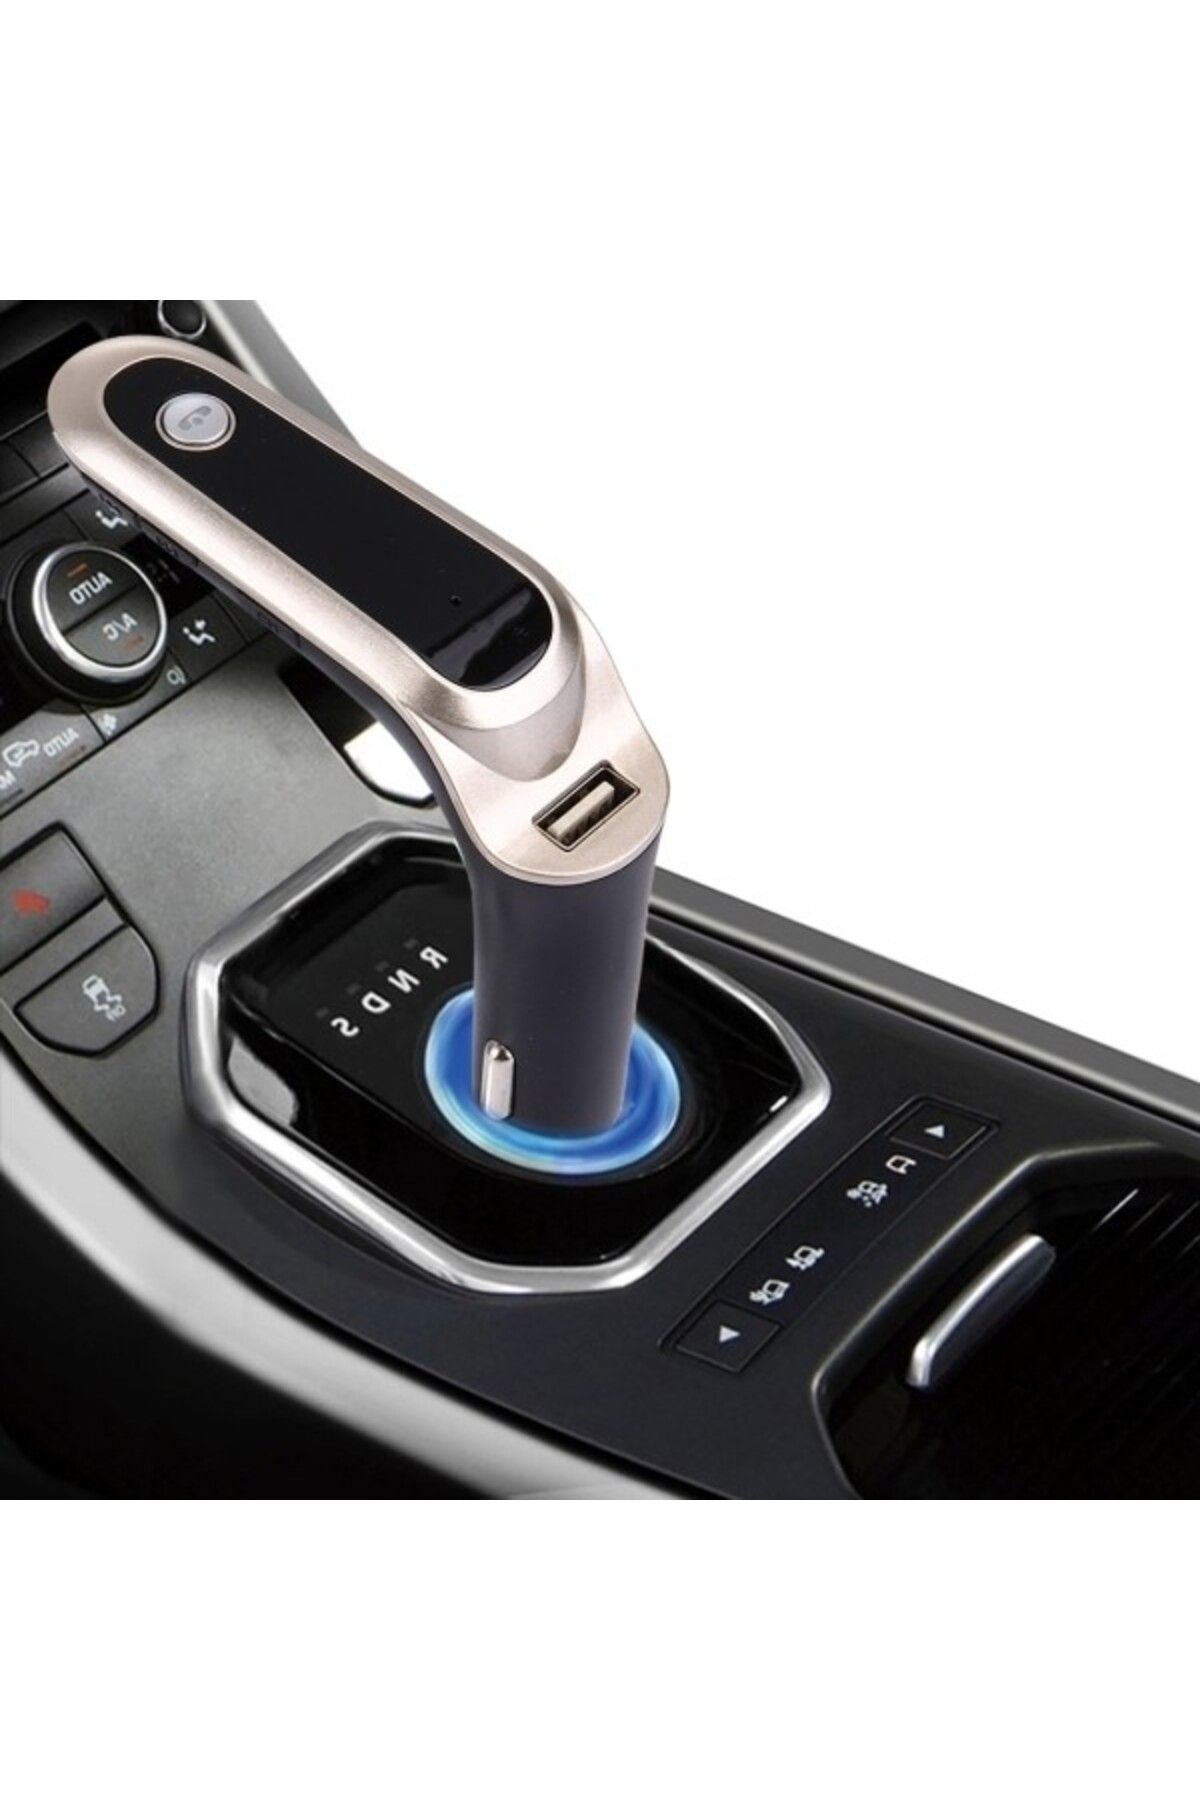 SKY TOPTAN Cars7 Bluetooth Hafıza Kart Girişli 4.0 Araç Kiti Çakmaklık Mp3 Fm Transmitter (LİSİNYA)